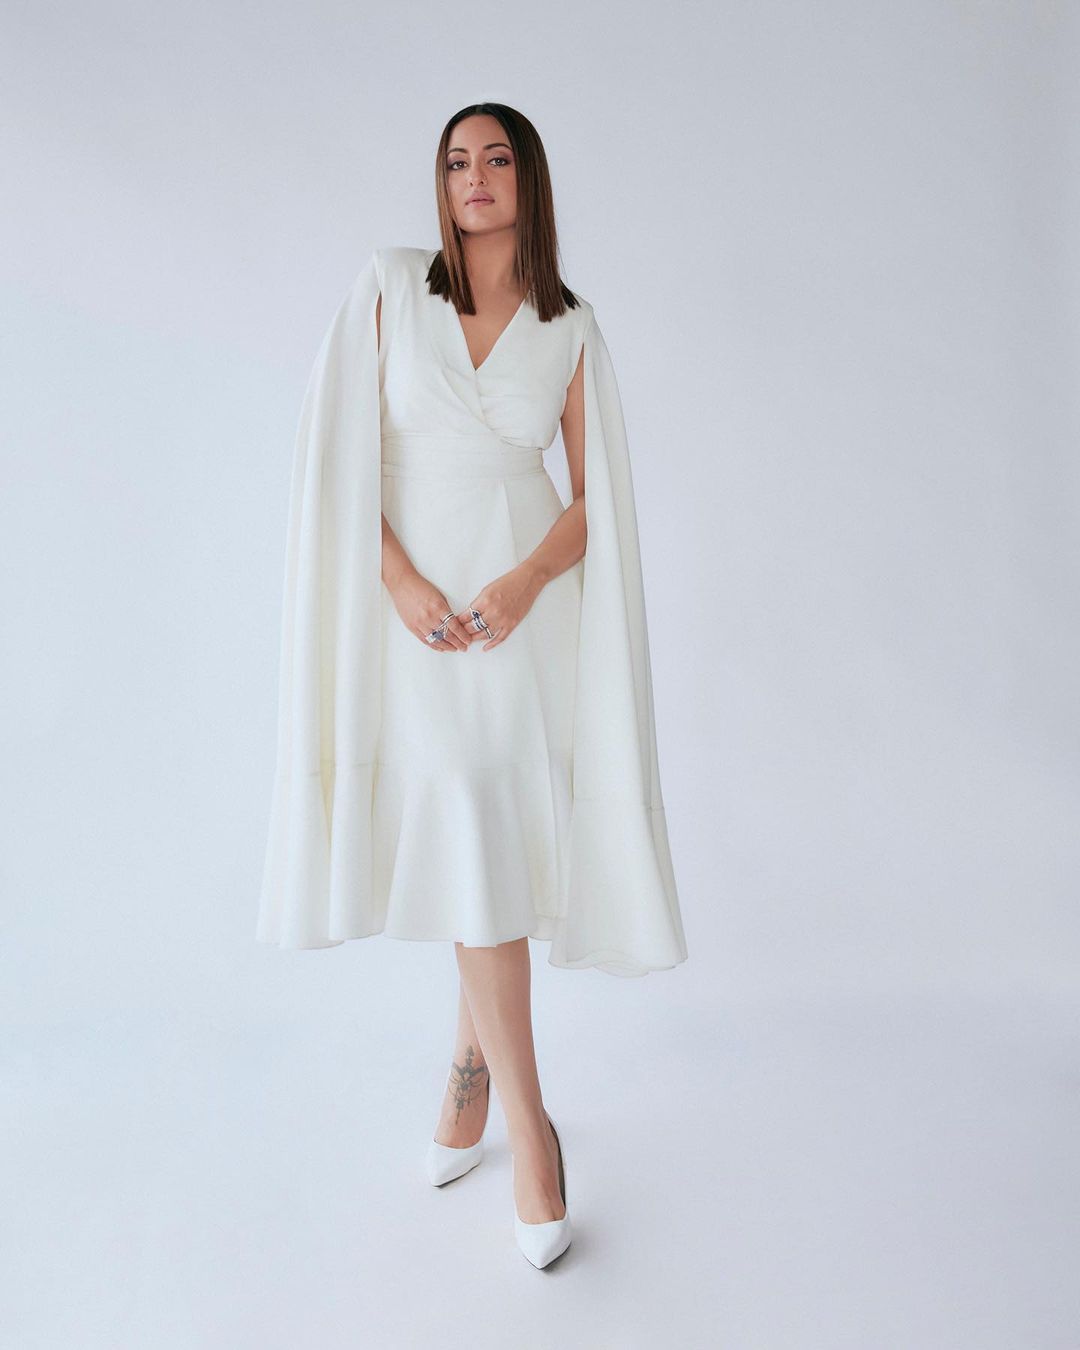 The White Dramatic Sleeve Dress Of Sonakshi Sinha